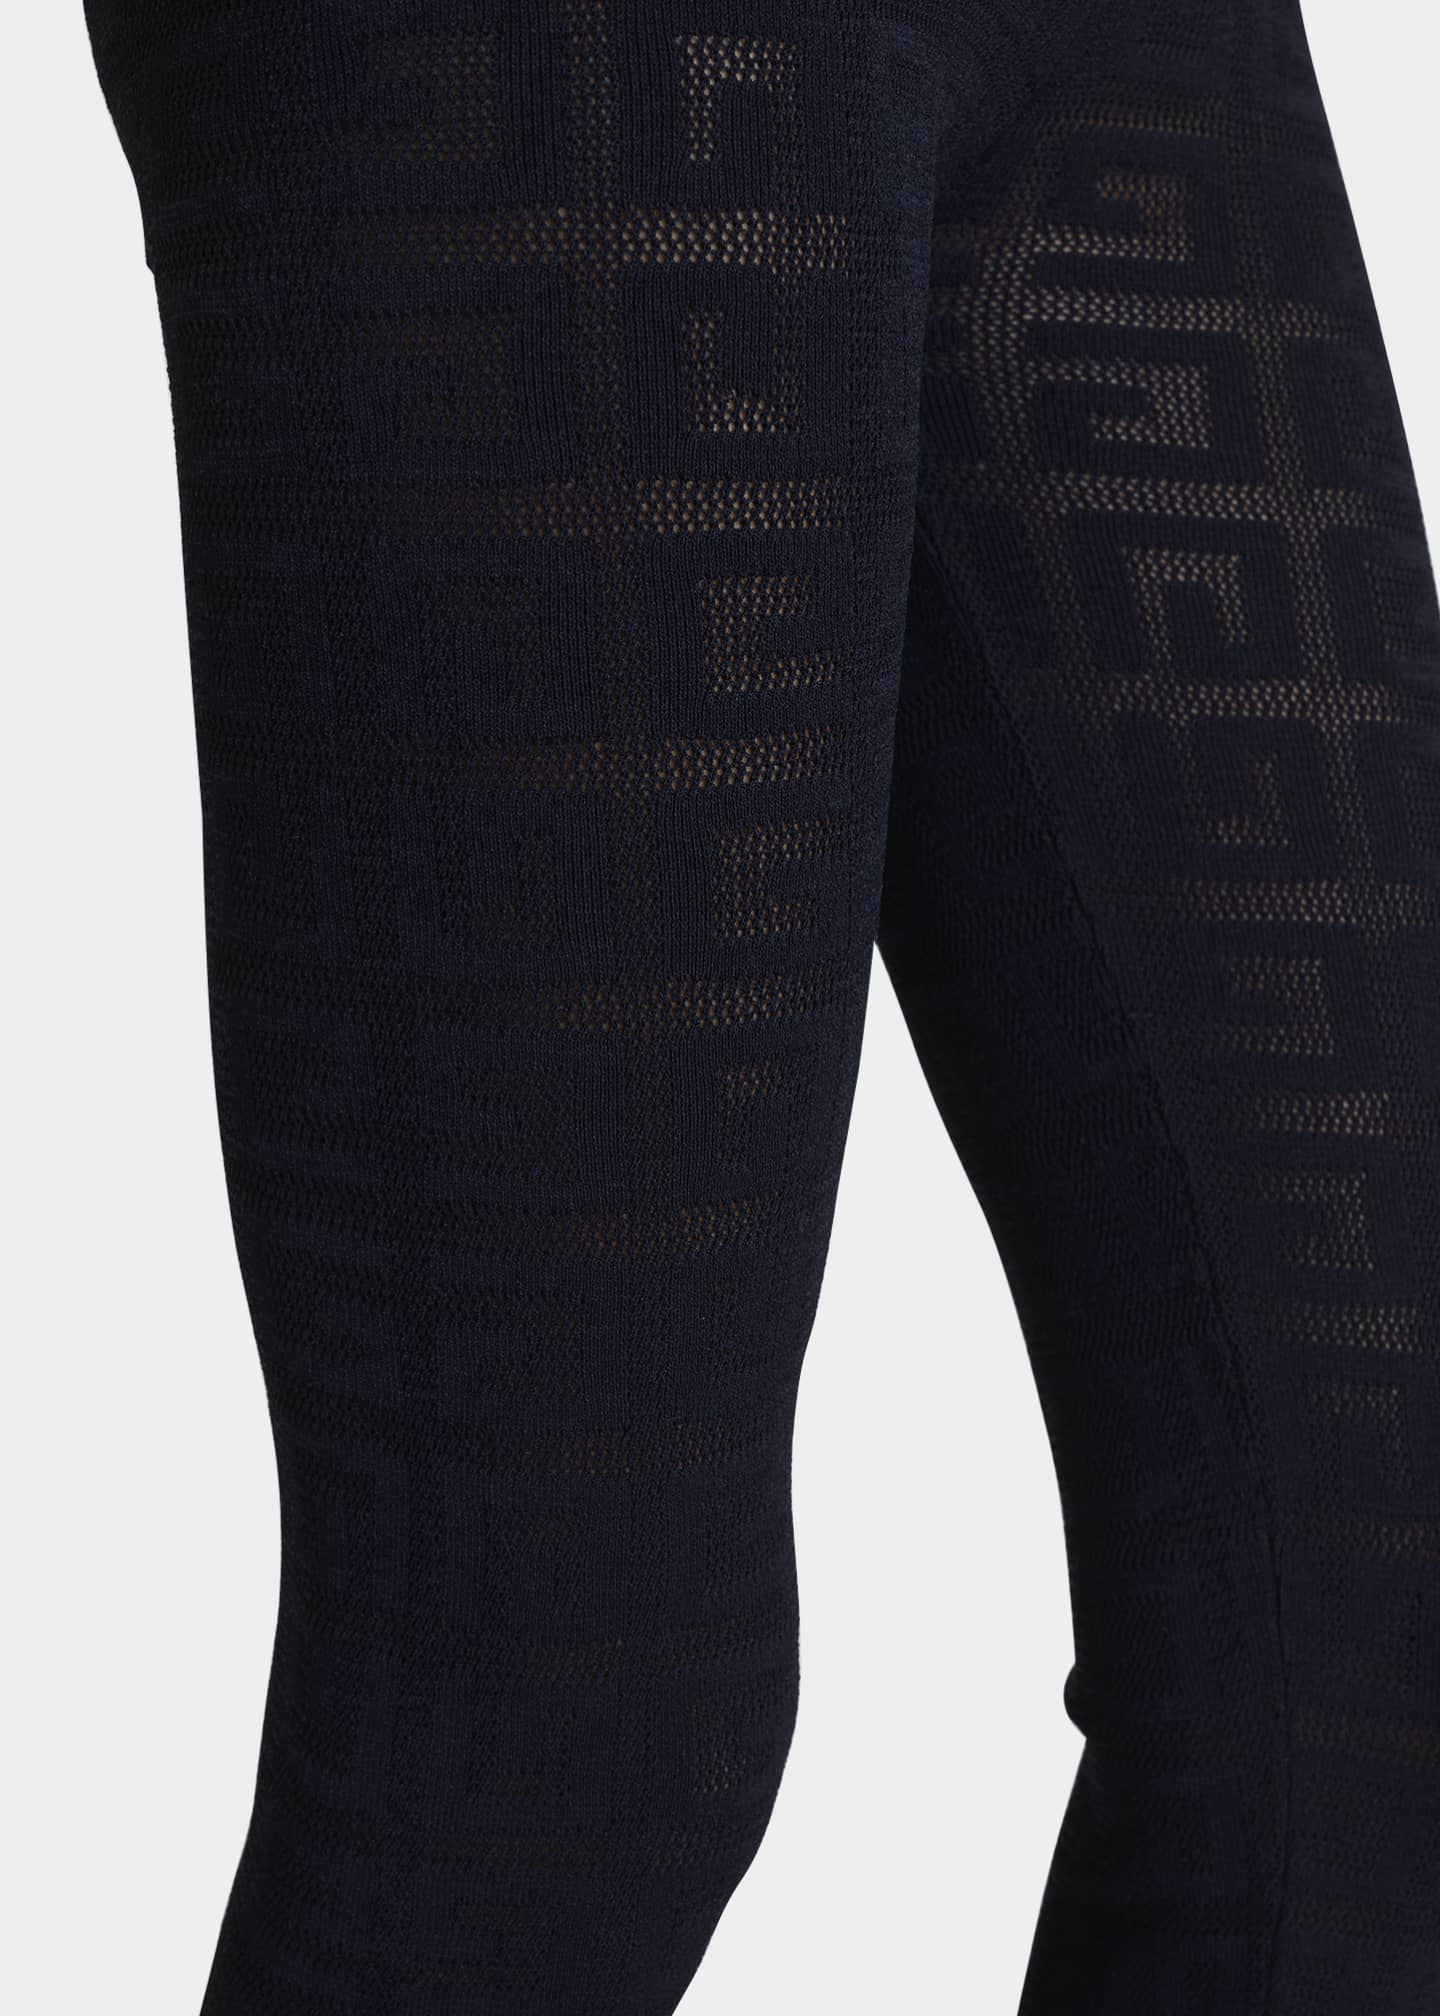 Givenchy 4G Monogram Lace Legging in Black